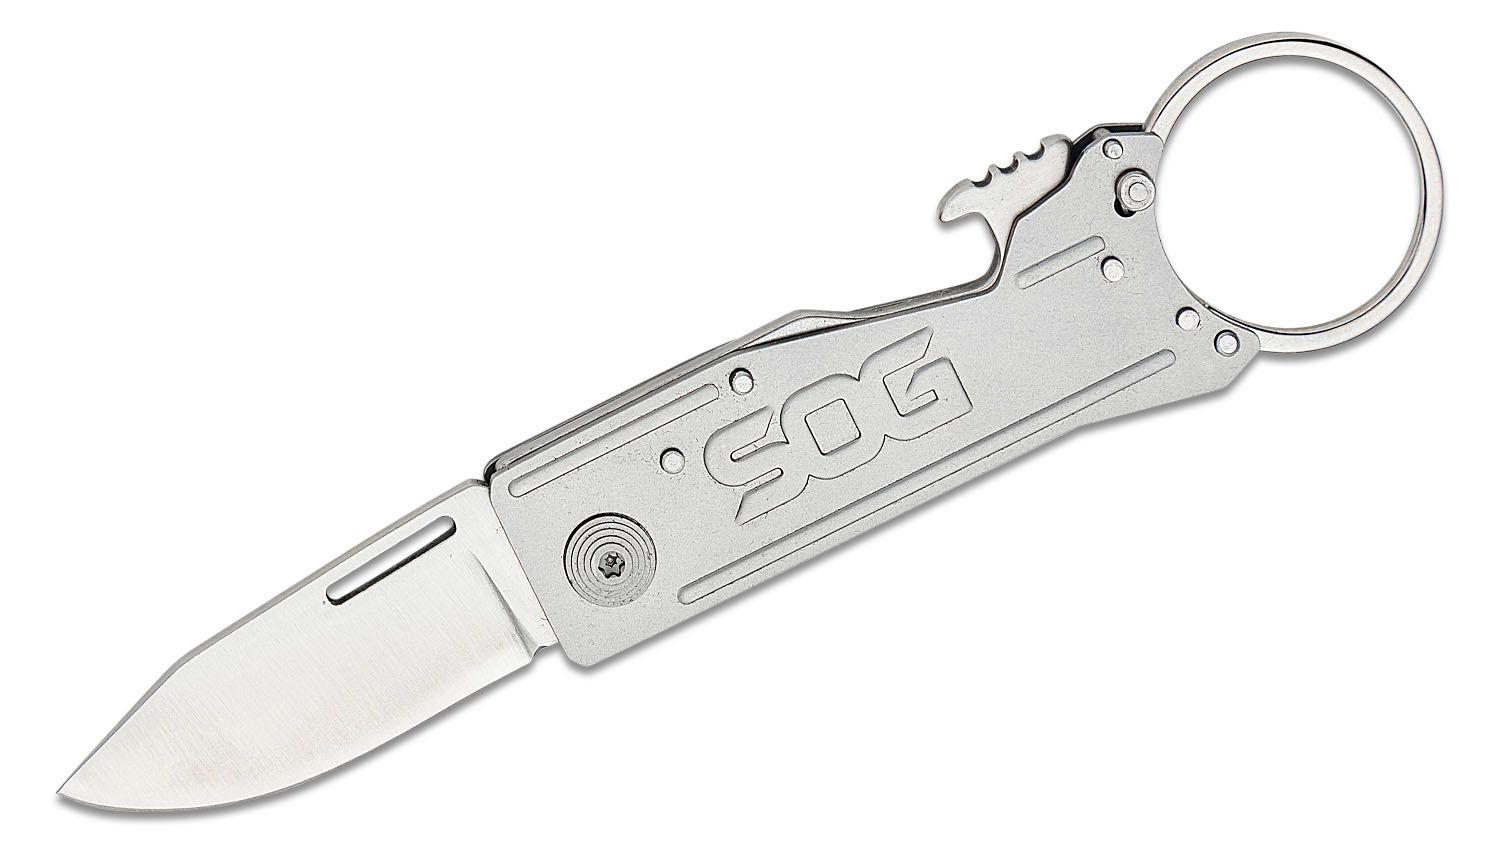 SOG Keytron 1 Folding Knife Fits on Your Keychain, Opens Bottles Too